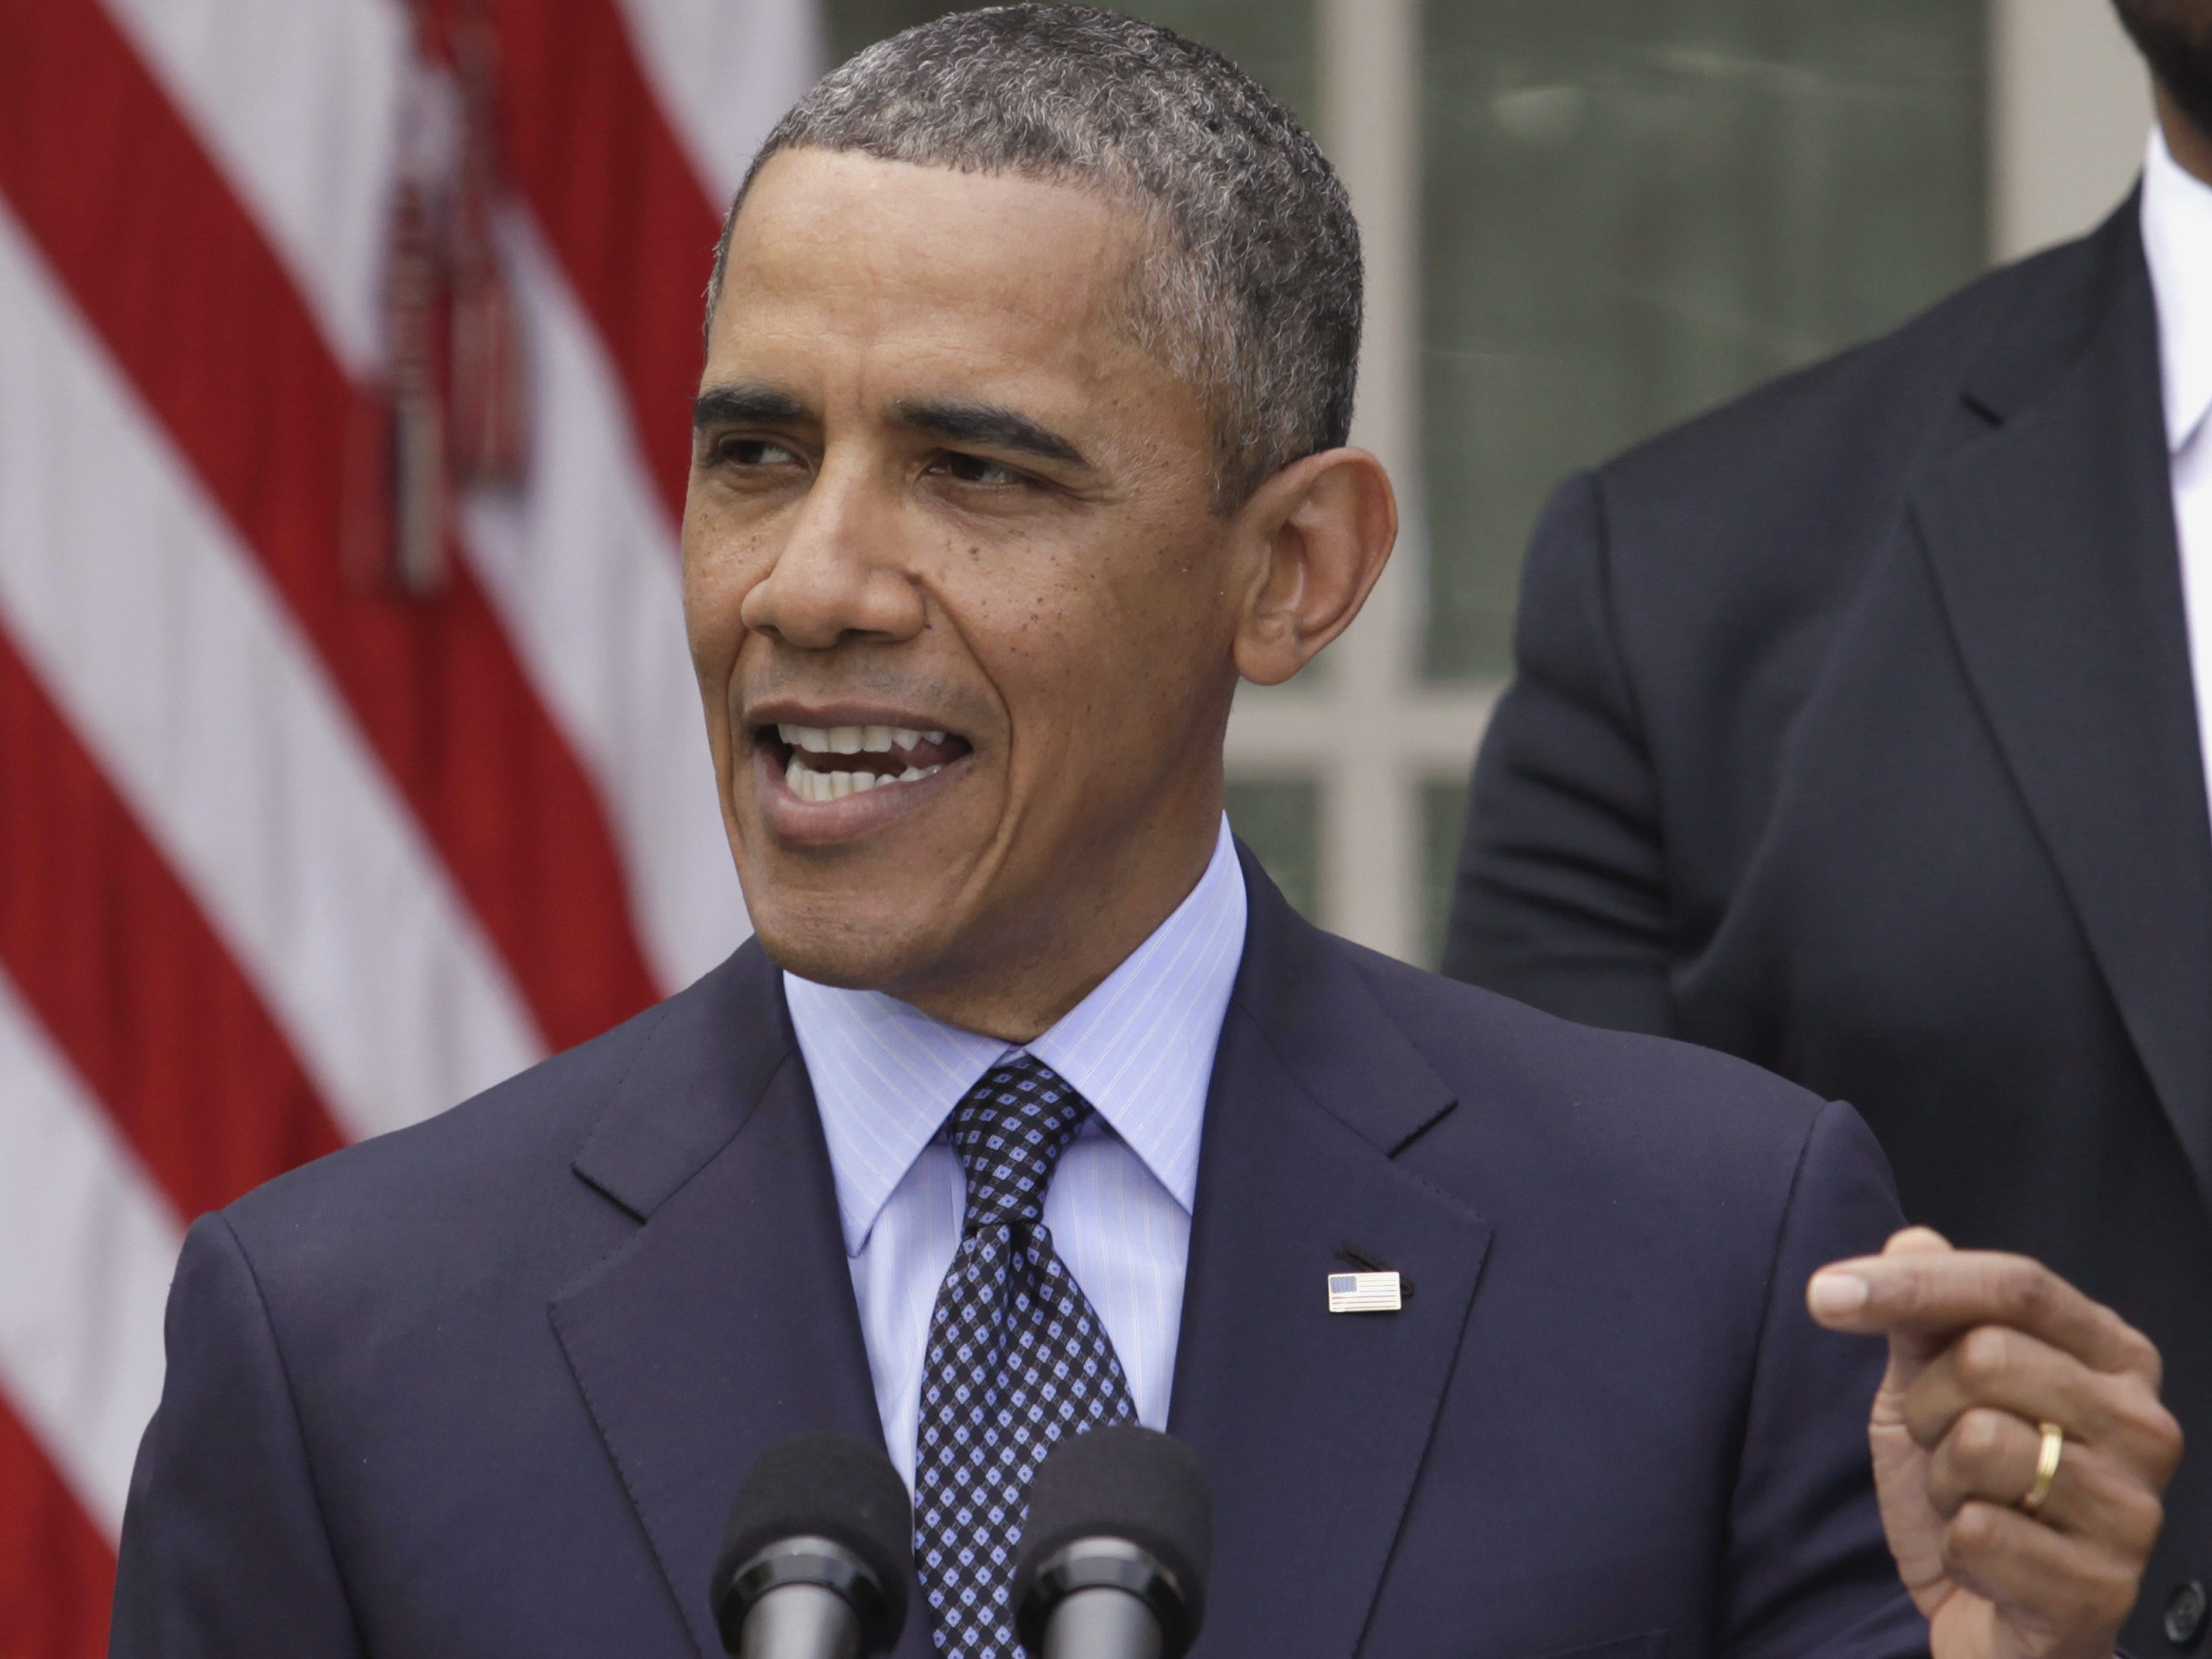 Obama says NRA 'lied' as Senate fails on gun safety